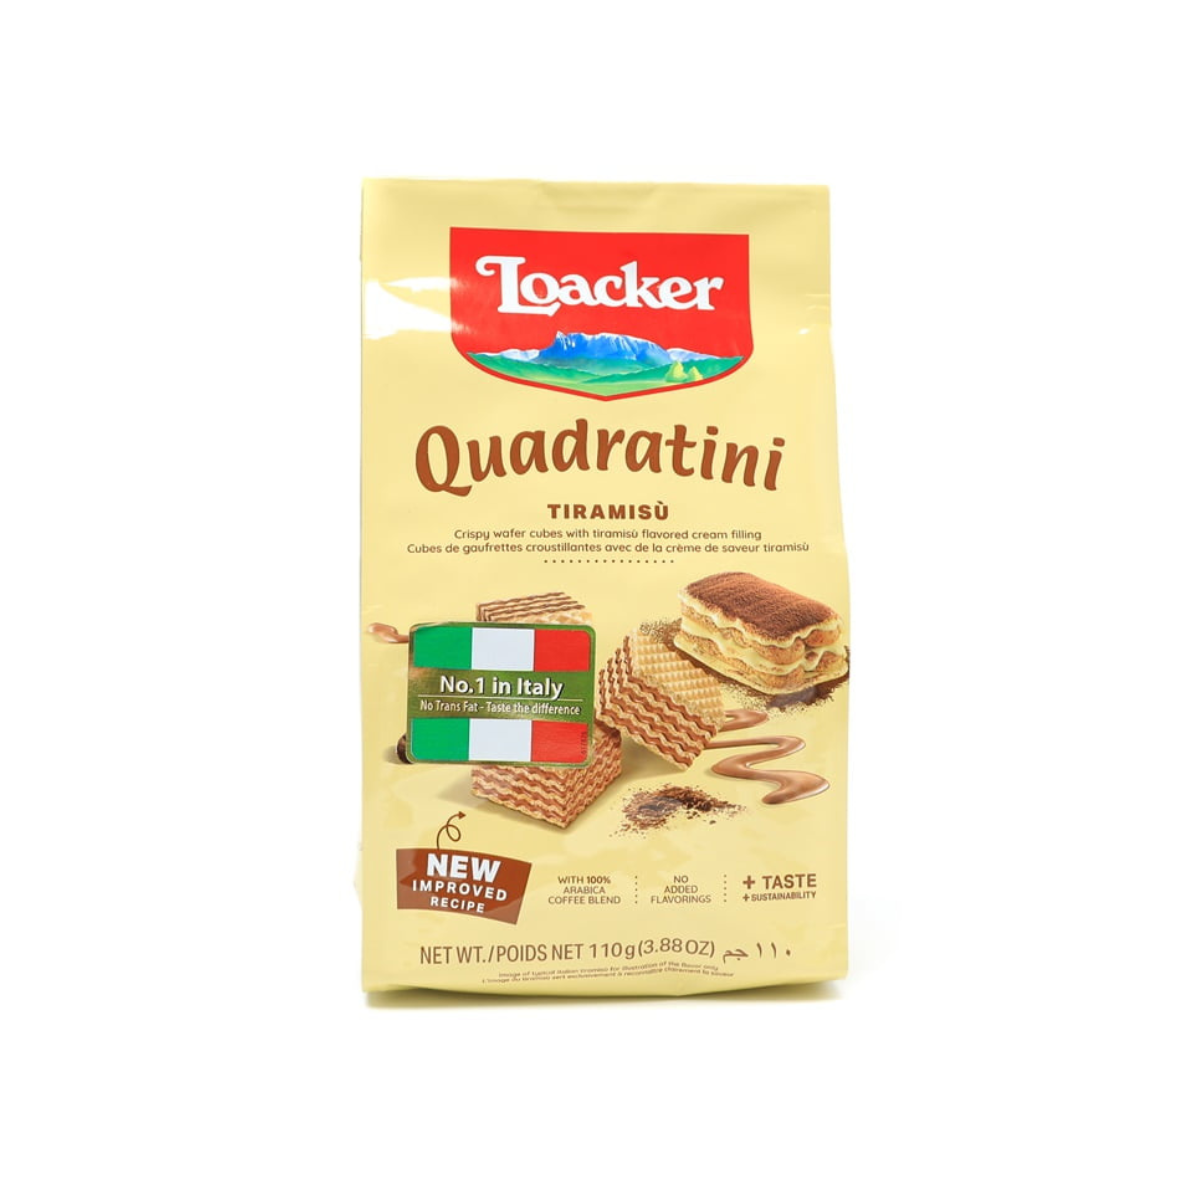 Loacker Quadratini Tiramisu - Crispy Wafer Cubes - 110g